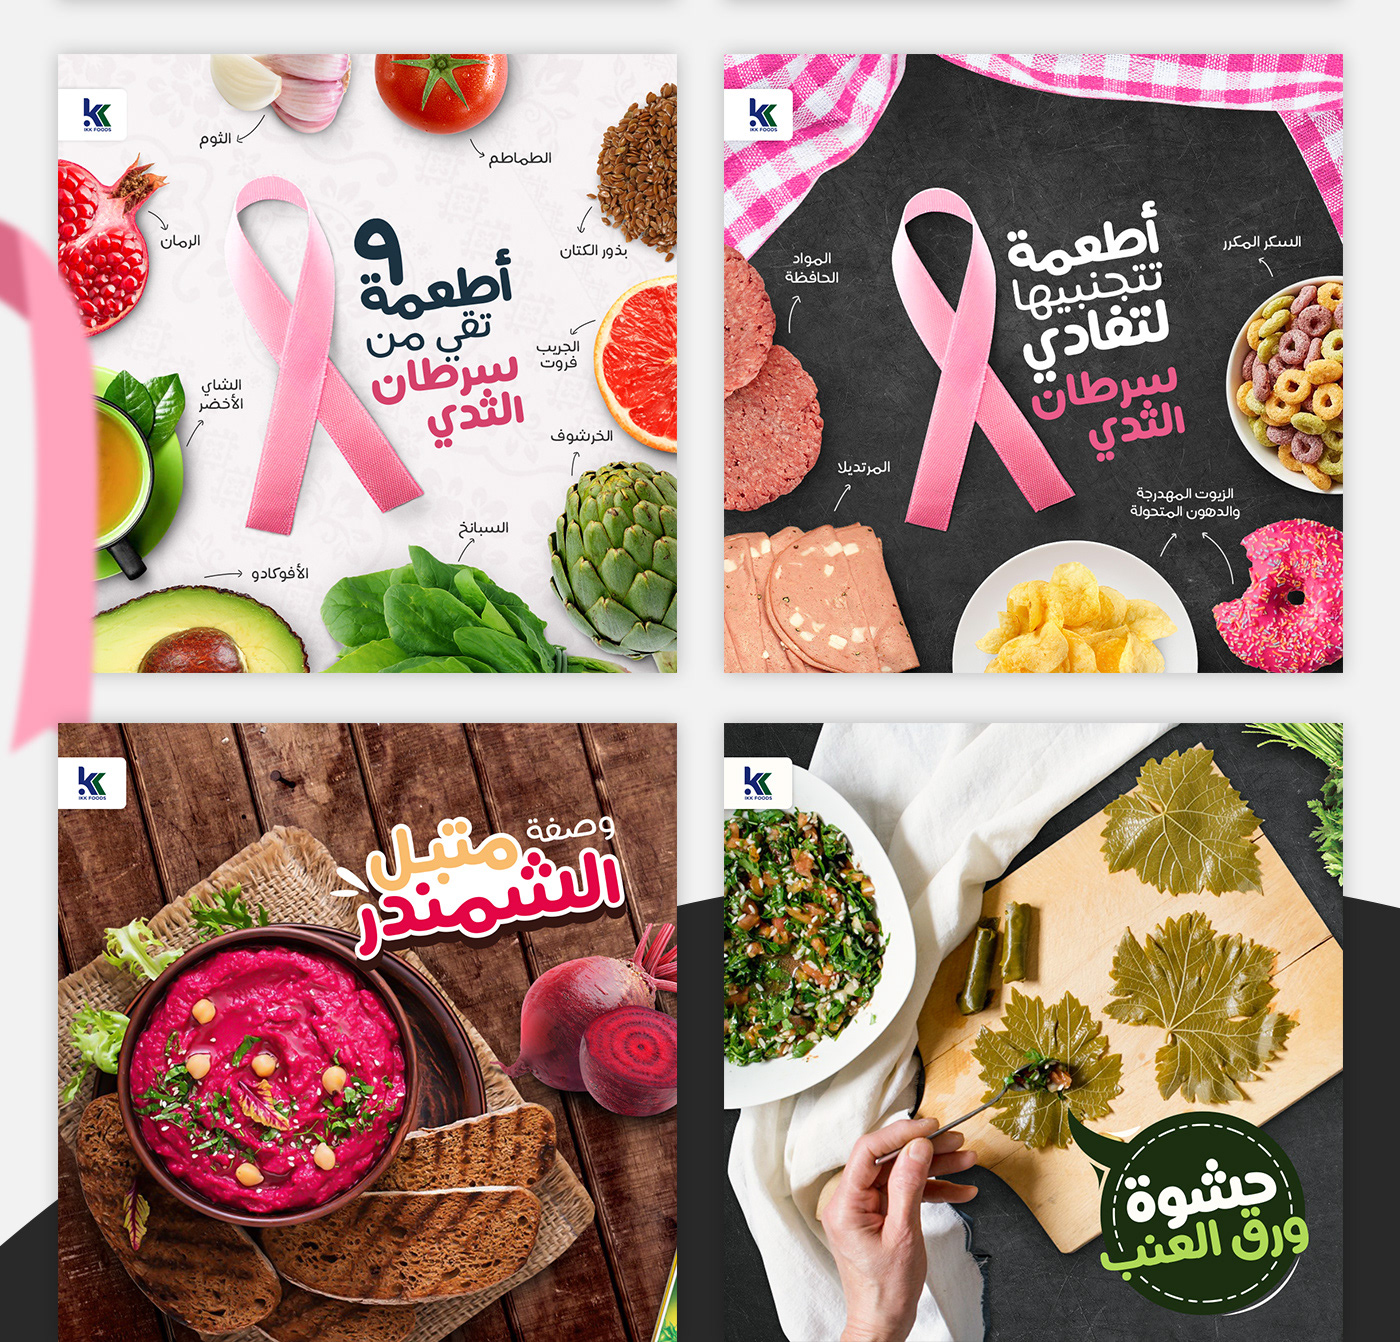 Food  social media facebook Saudi Eid National day ingredients menu dessert kitchen